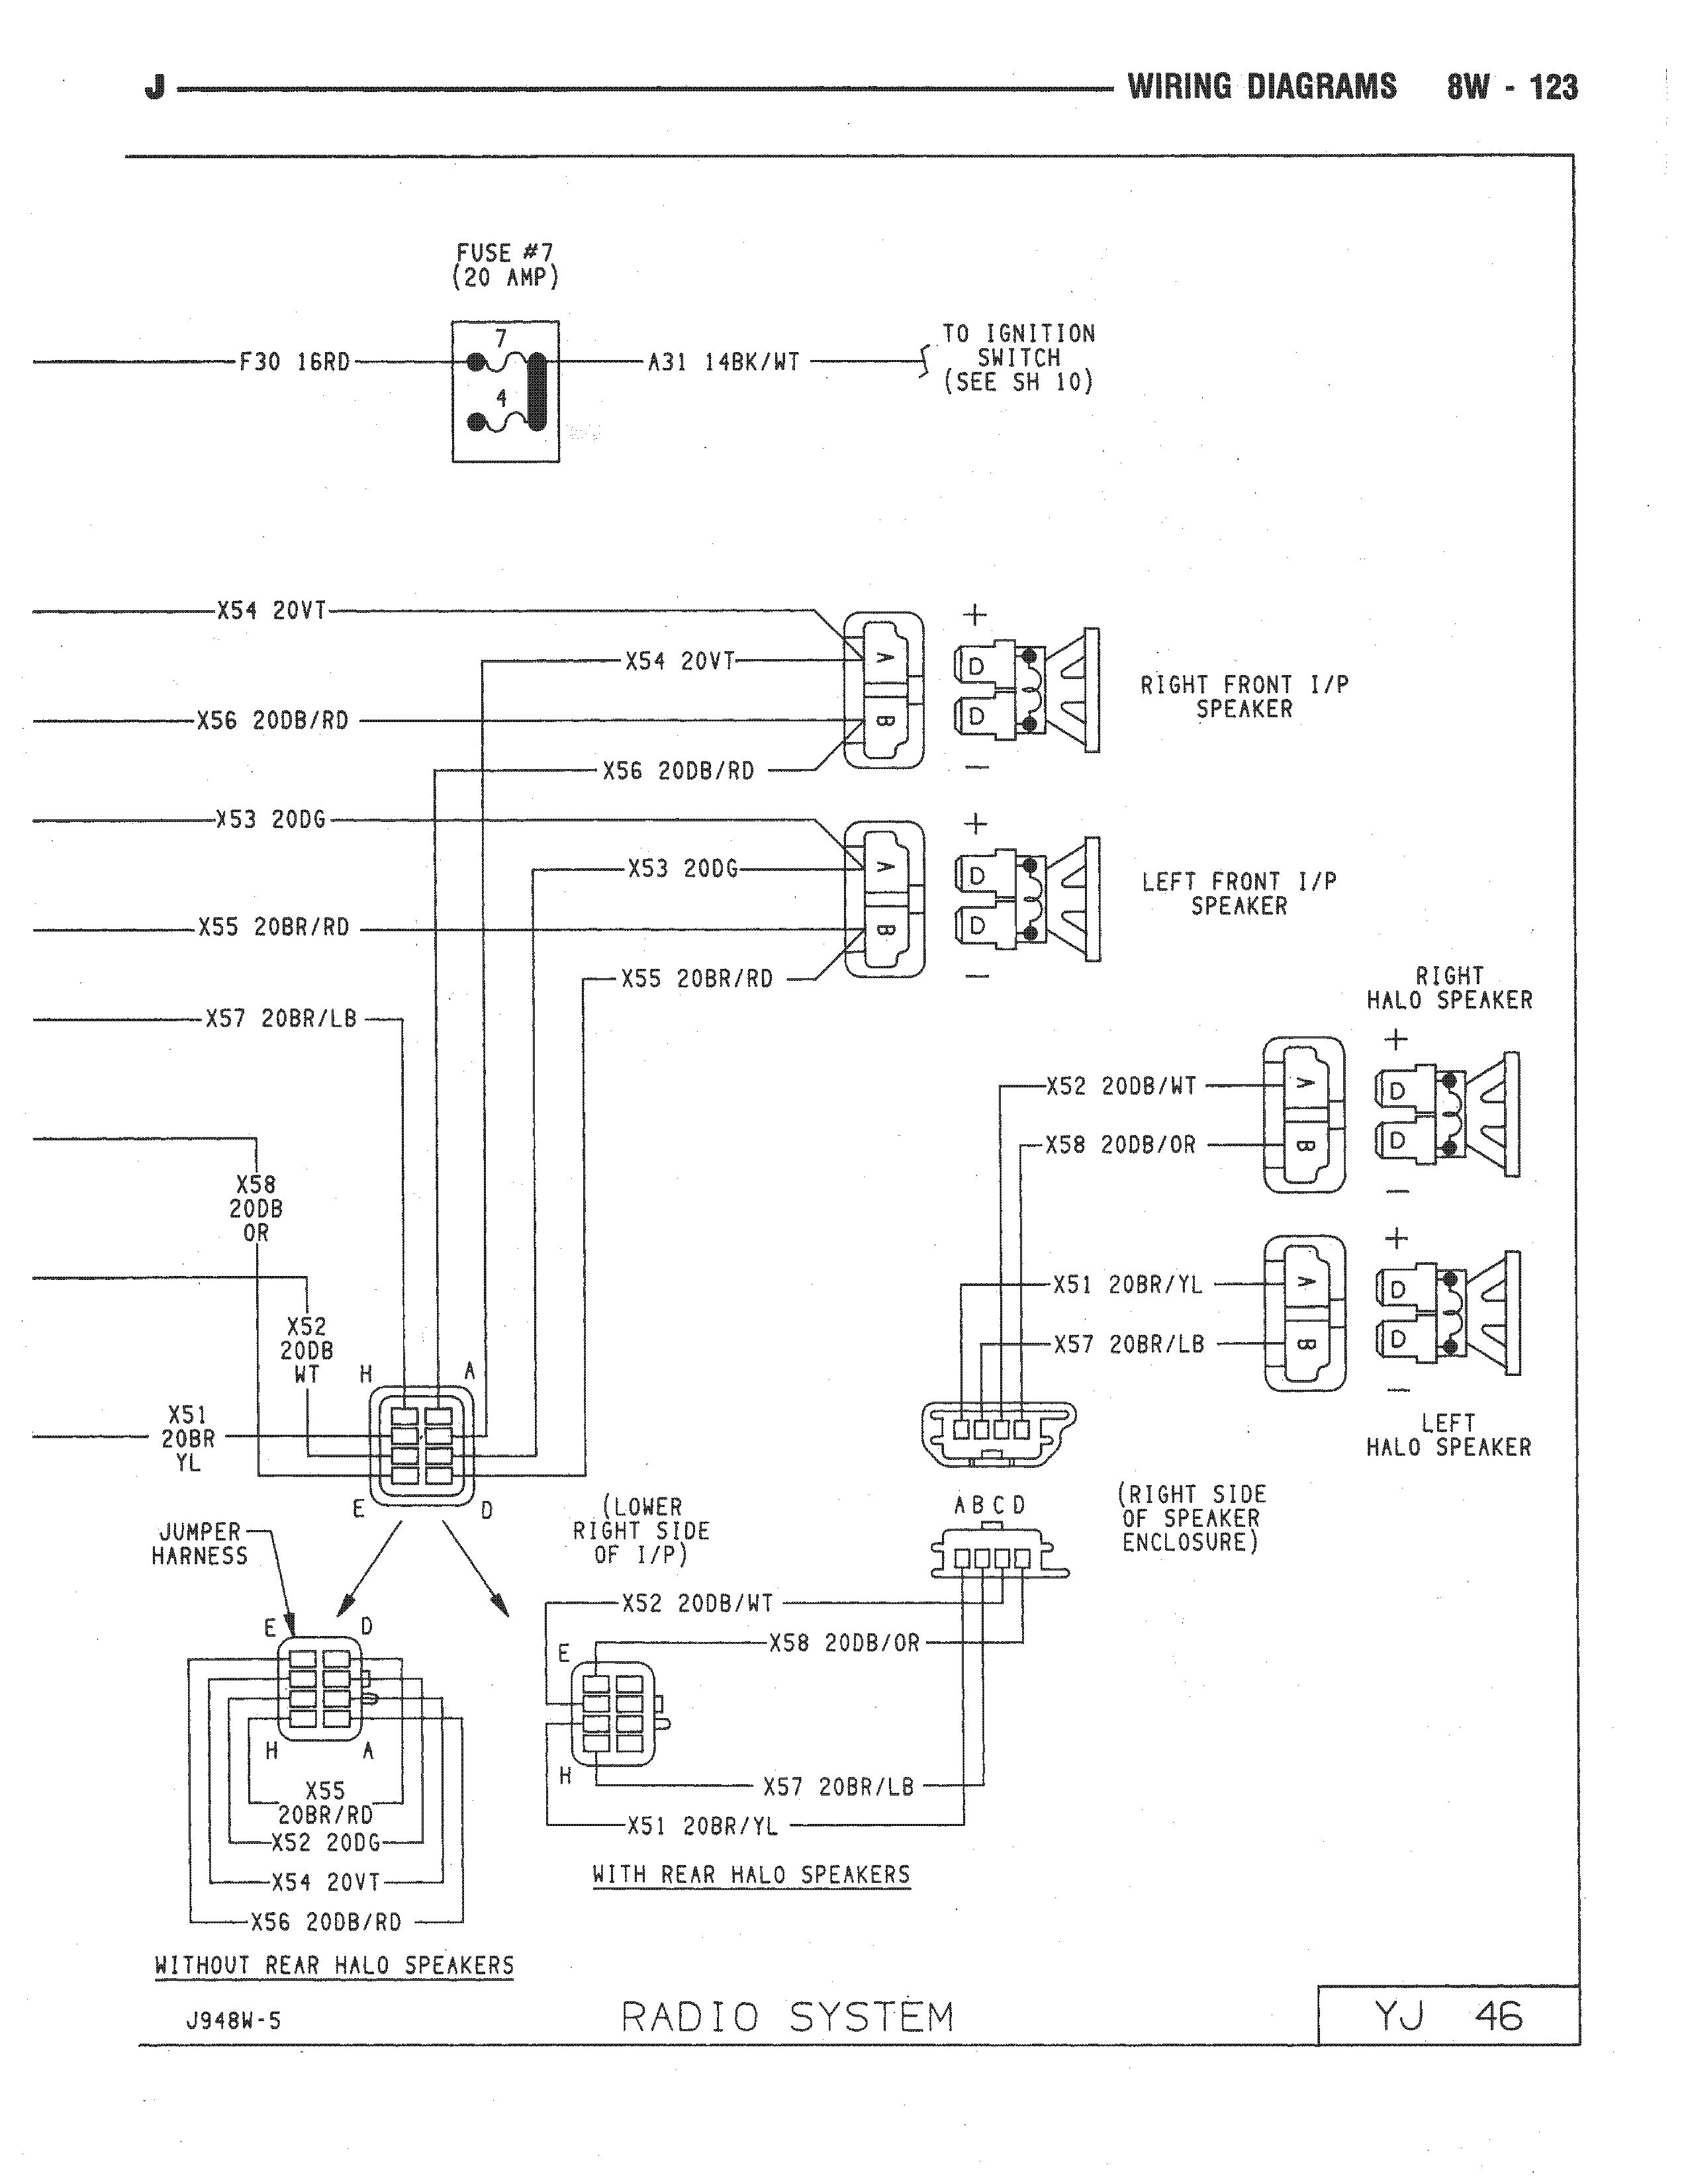 1997 Jeep Wrangler Radio Wiring Diagram 1997 Nissan Pick Up Stereo Wiring Diagram Wiring Diagram Center